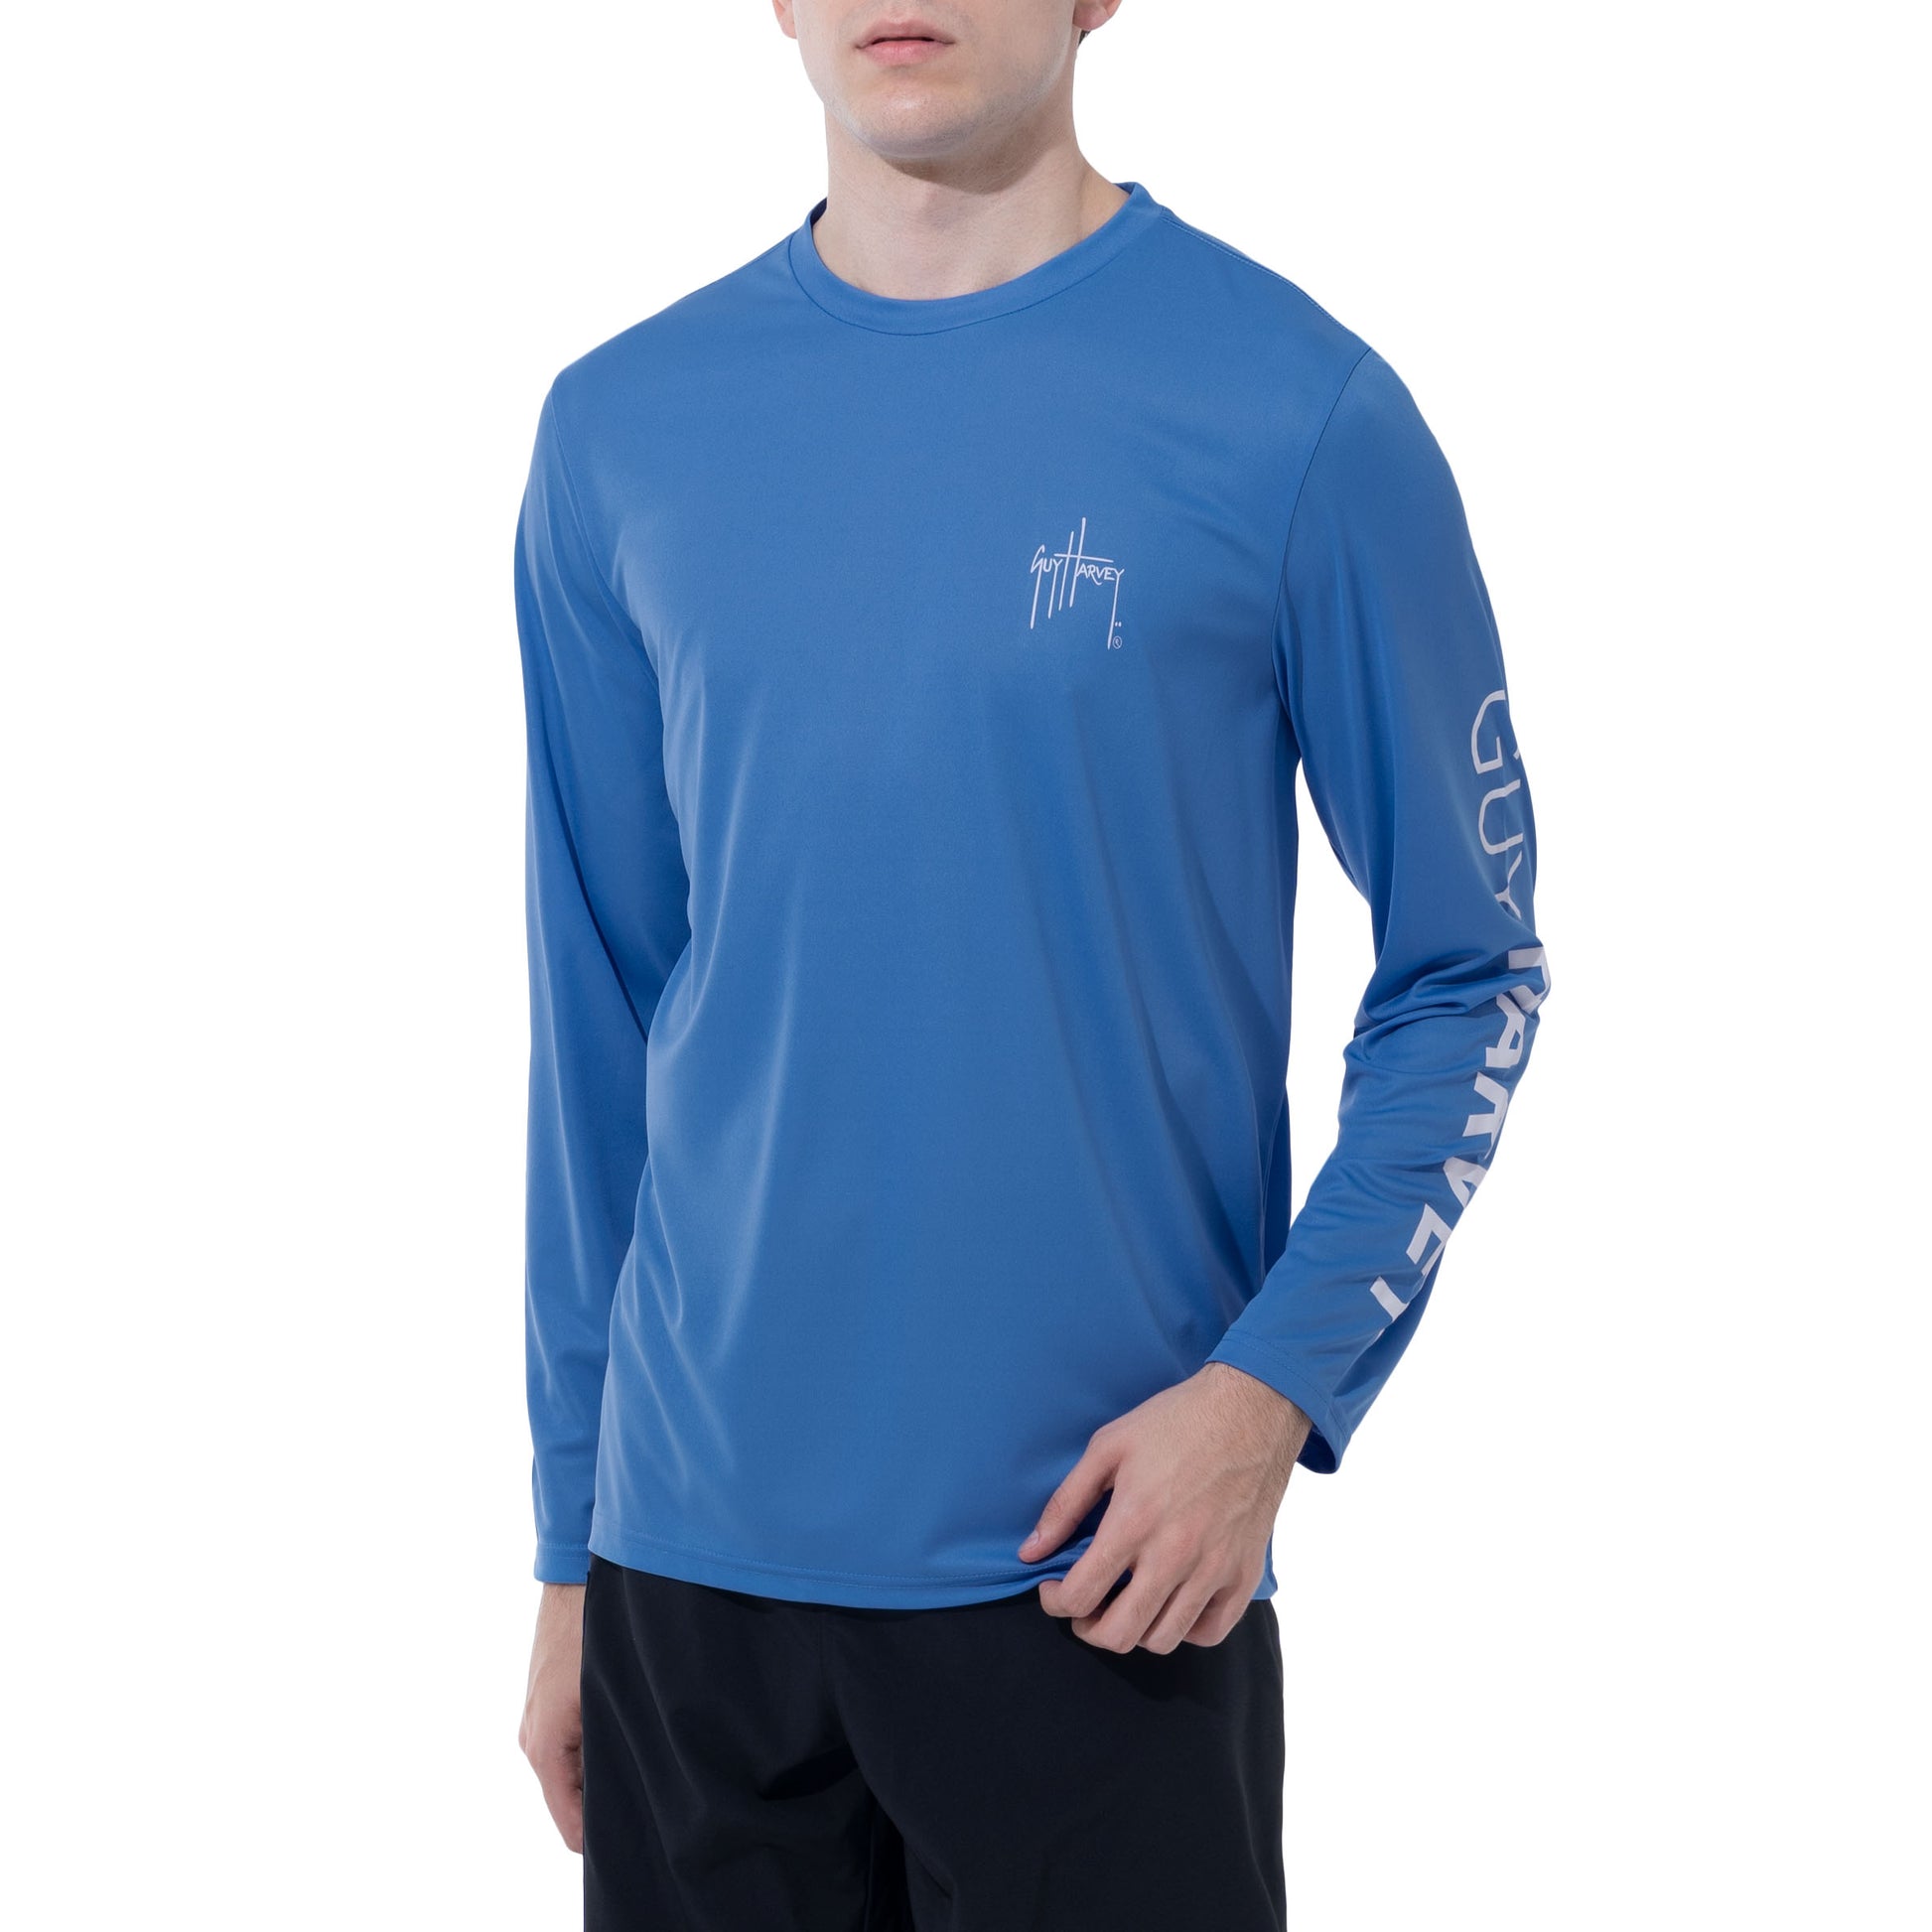 Men's Long Sleeve Sun Protection Shirt Upf 50+ UV Quick Dry